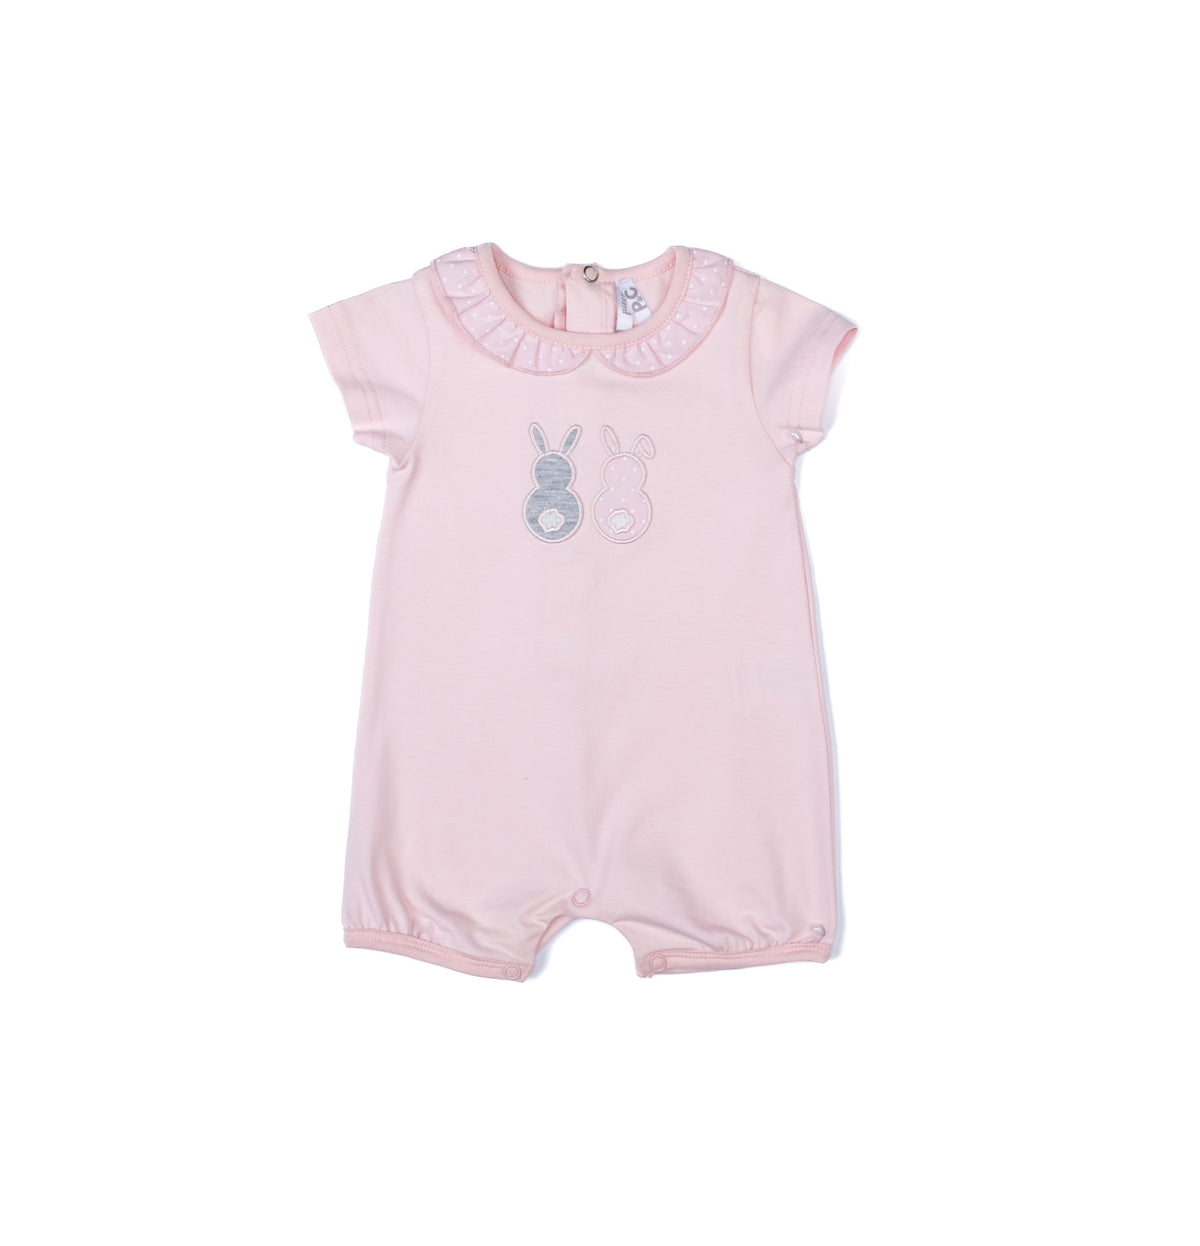 Baby girl pink cute half sleeve romper by Pompelo